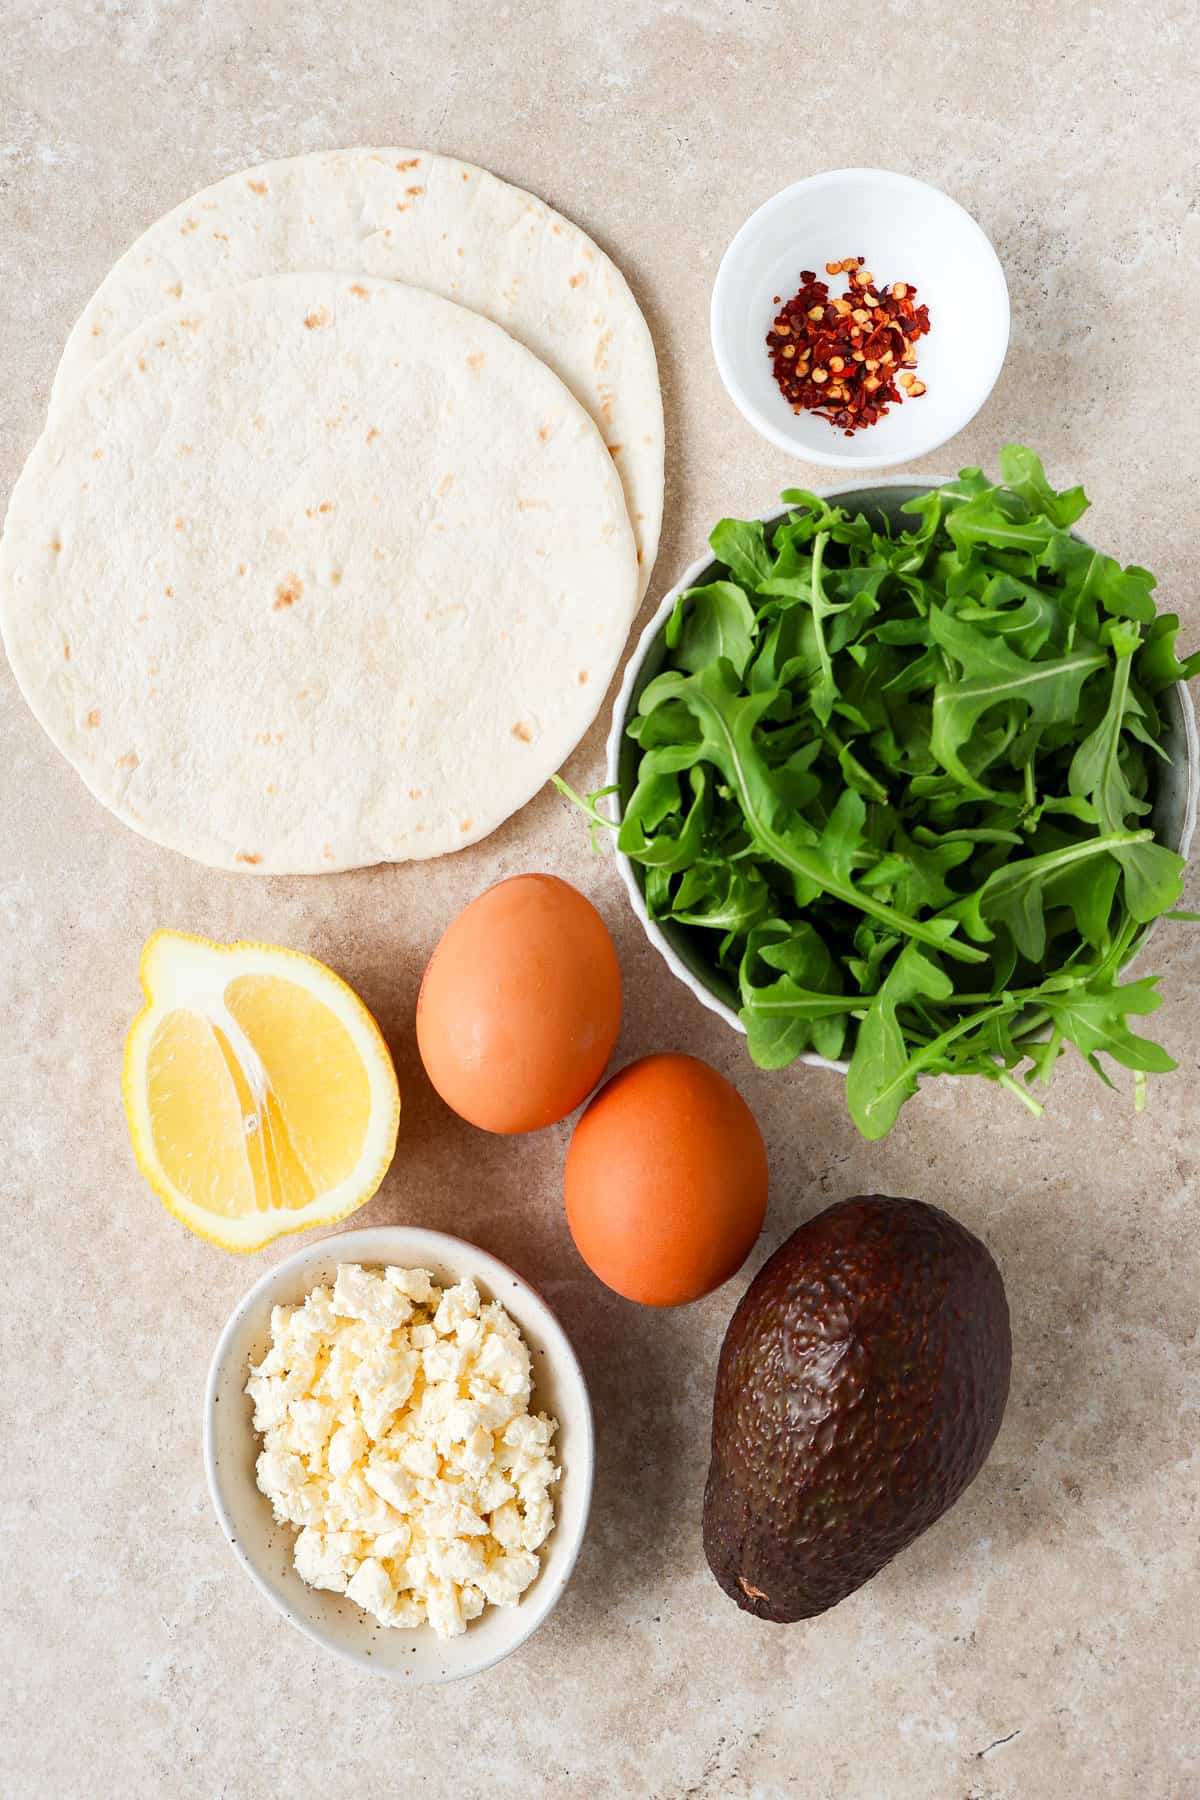 Ingredients shown to make the crispy feta fried egg tortilla.